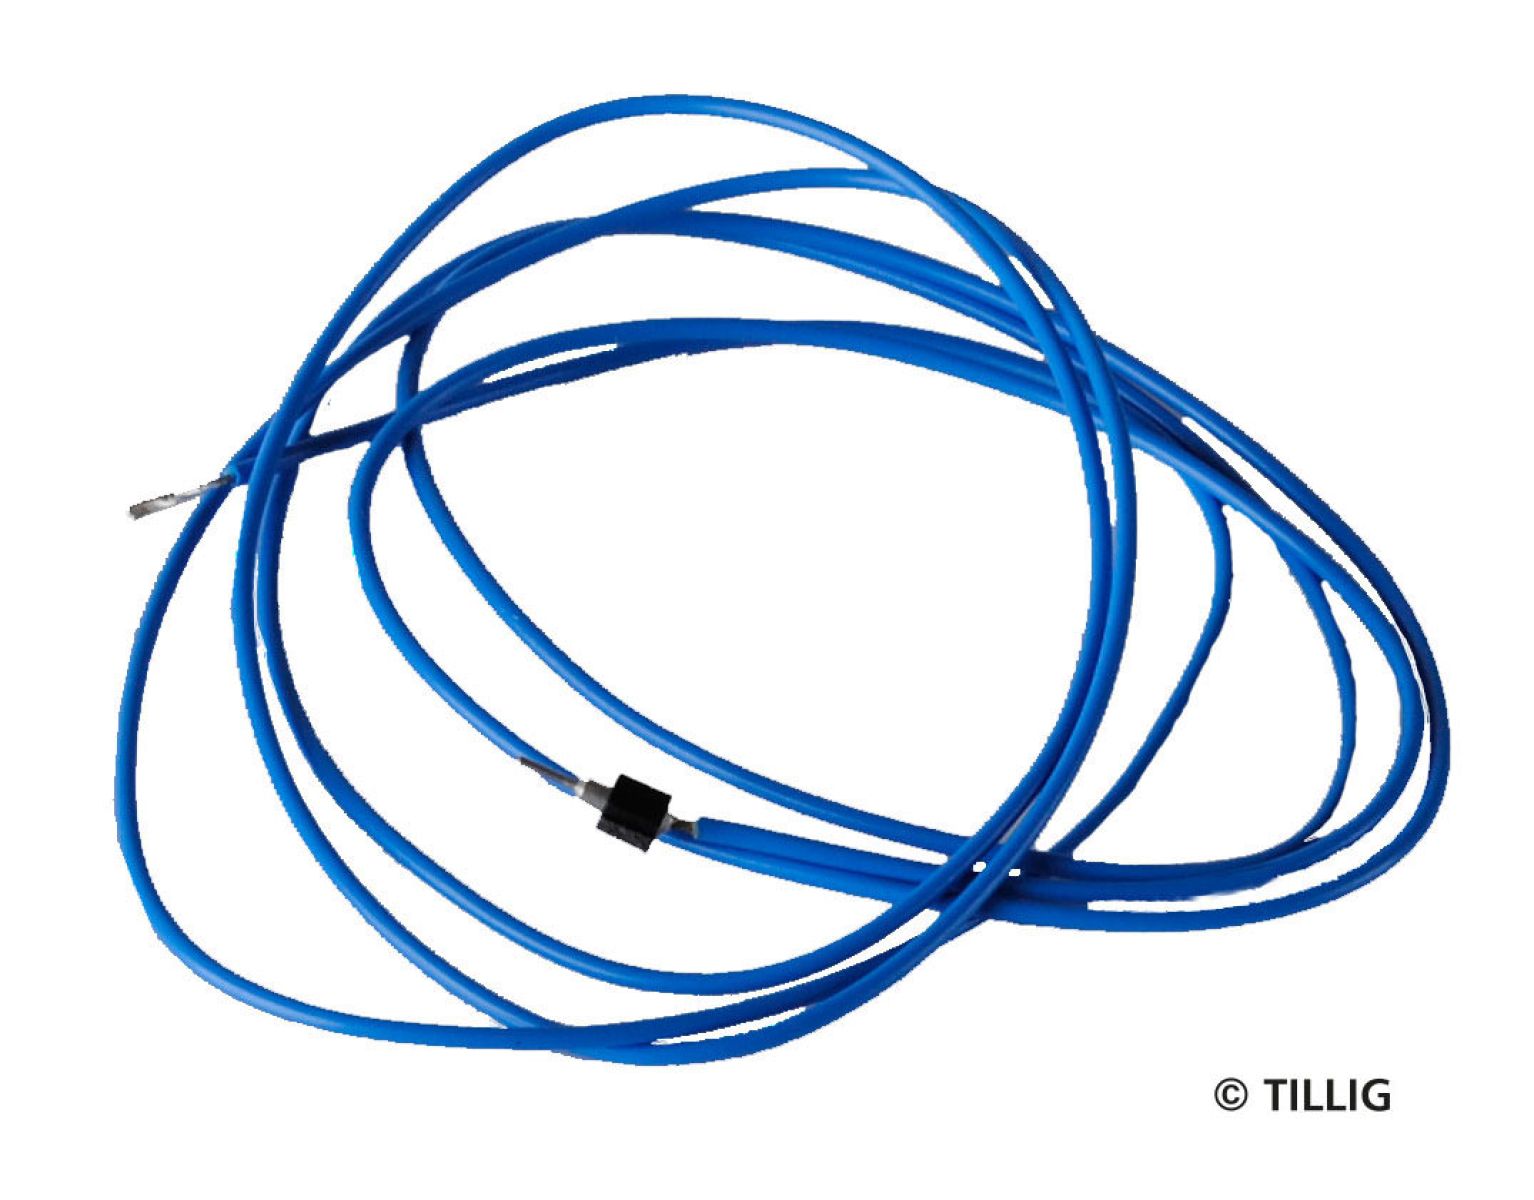 Single-pole connection cable